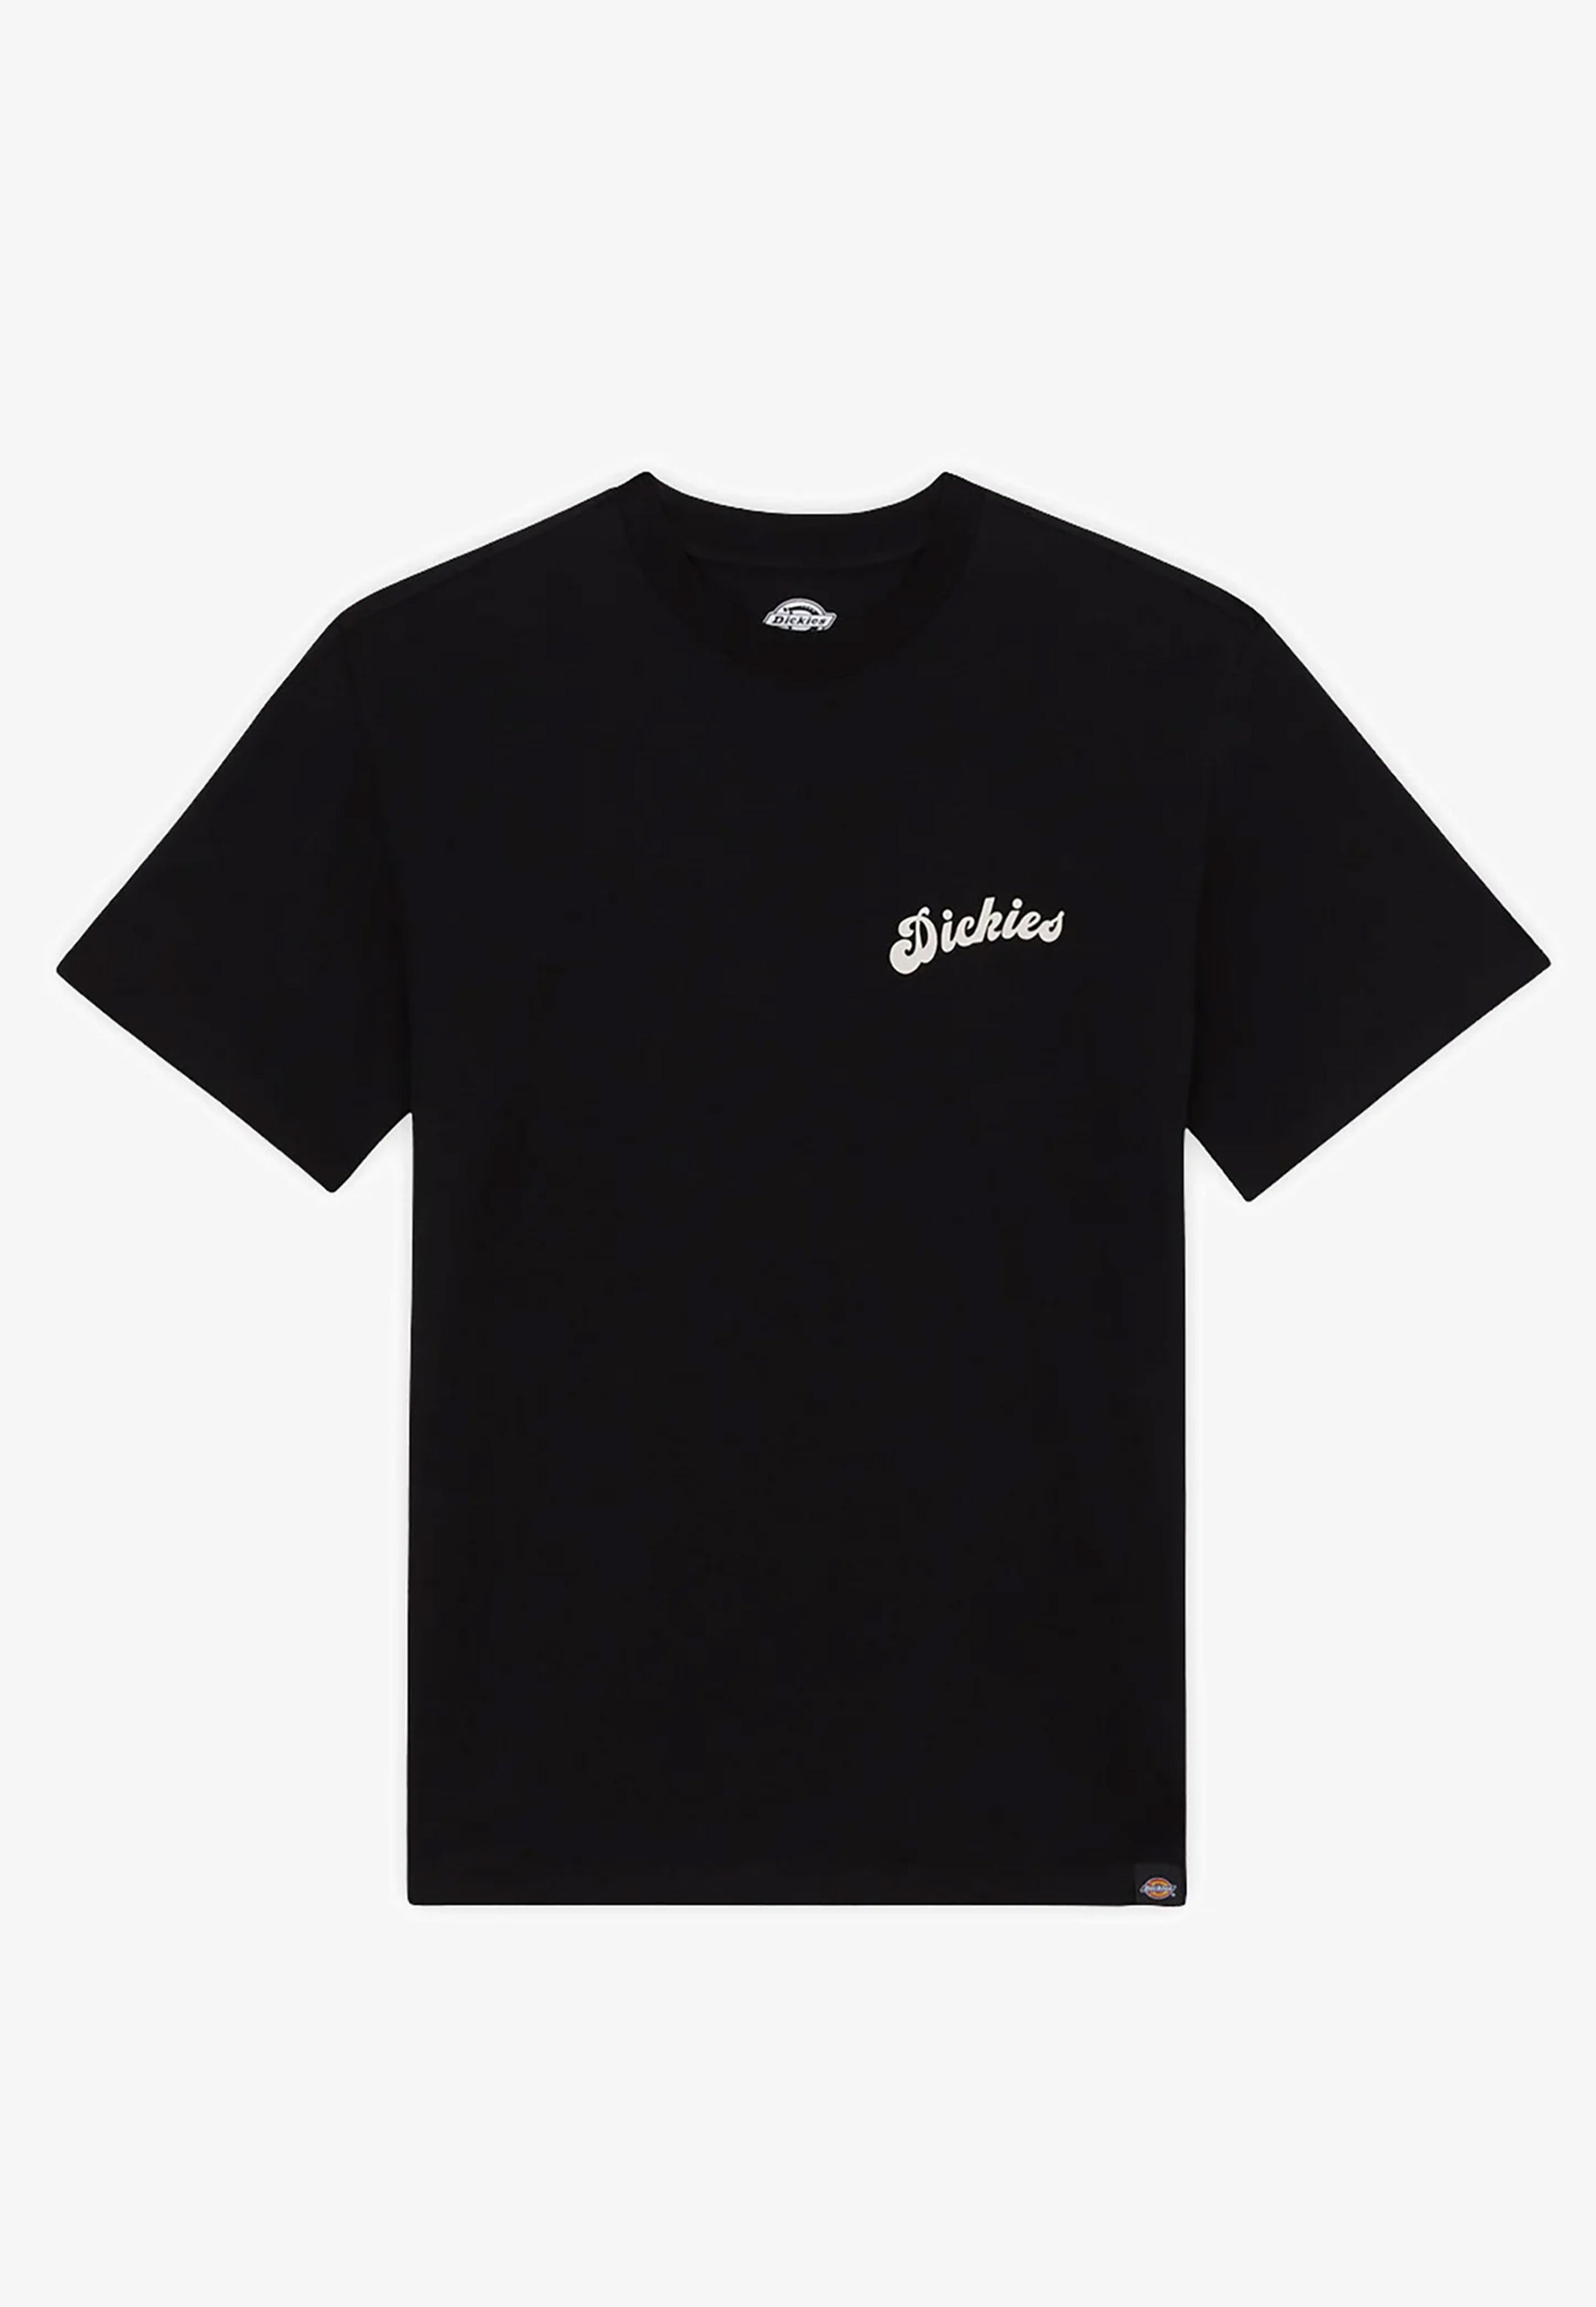 Dickies - Grainfield Black - T-Shirt